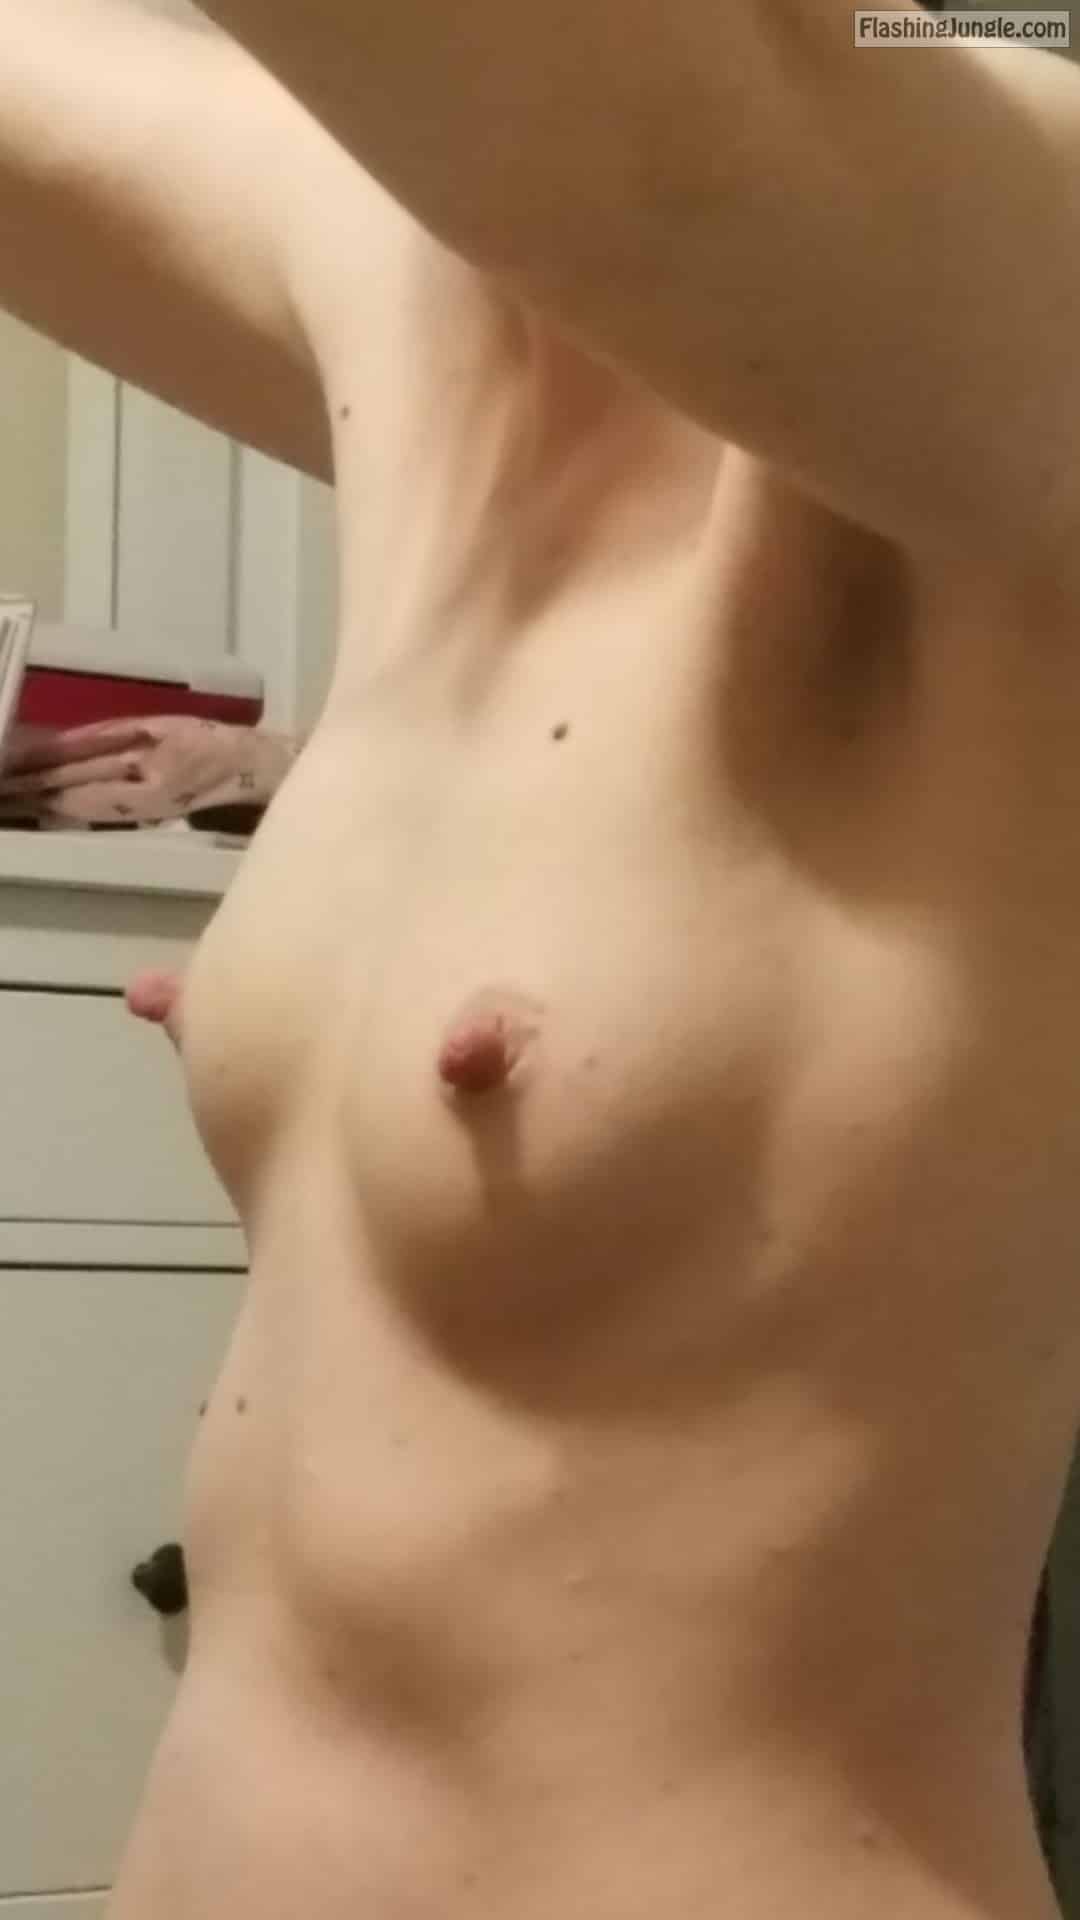 Small tits hard nipples real nudity boobs flash